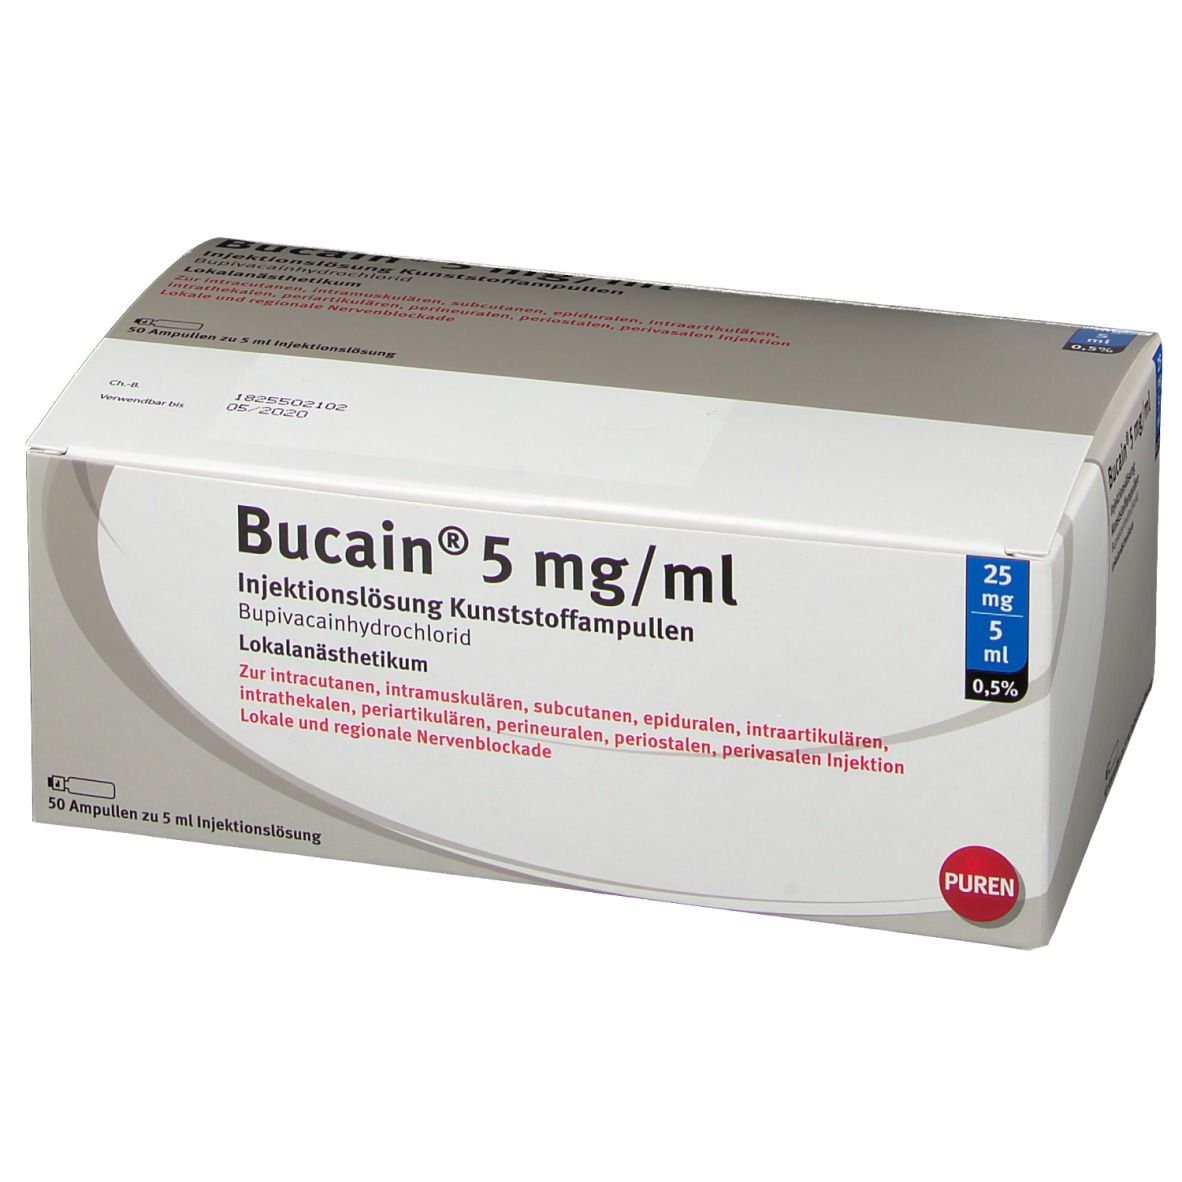 Bucain® 5 mg/ml